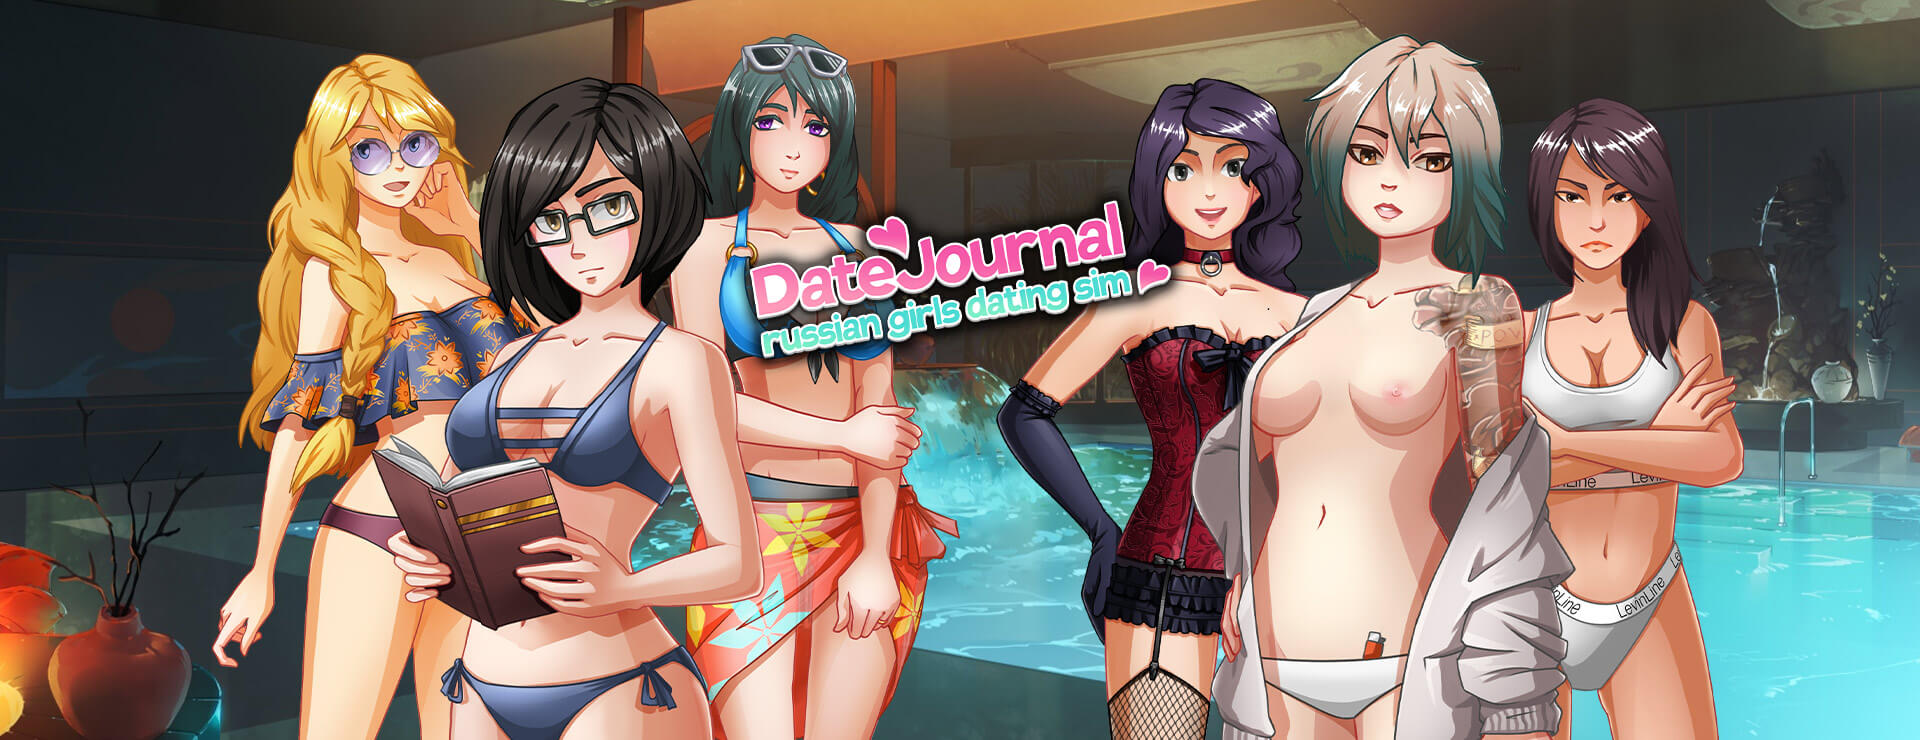 Date Journal: Russian Girls Dating Sim - カジュアル ゲーム